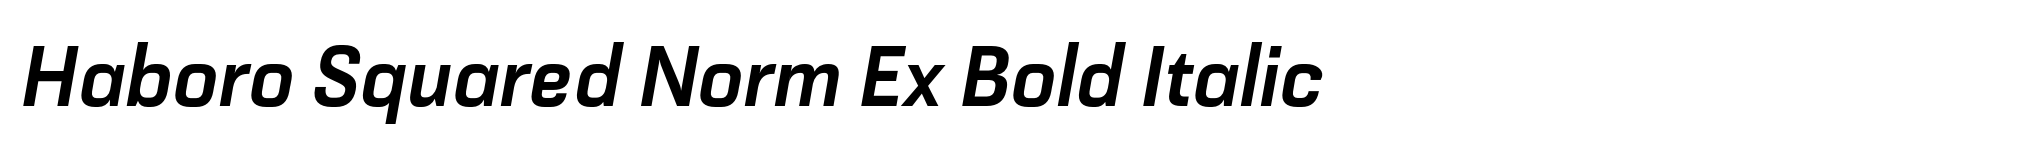 Haboro Squared Norm Ex Bold Italic image